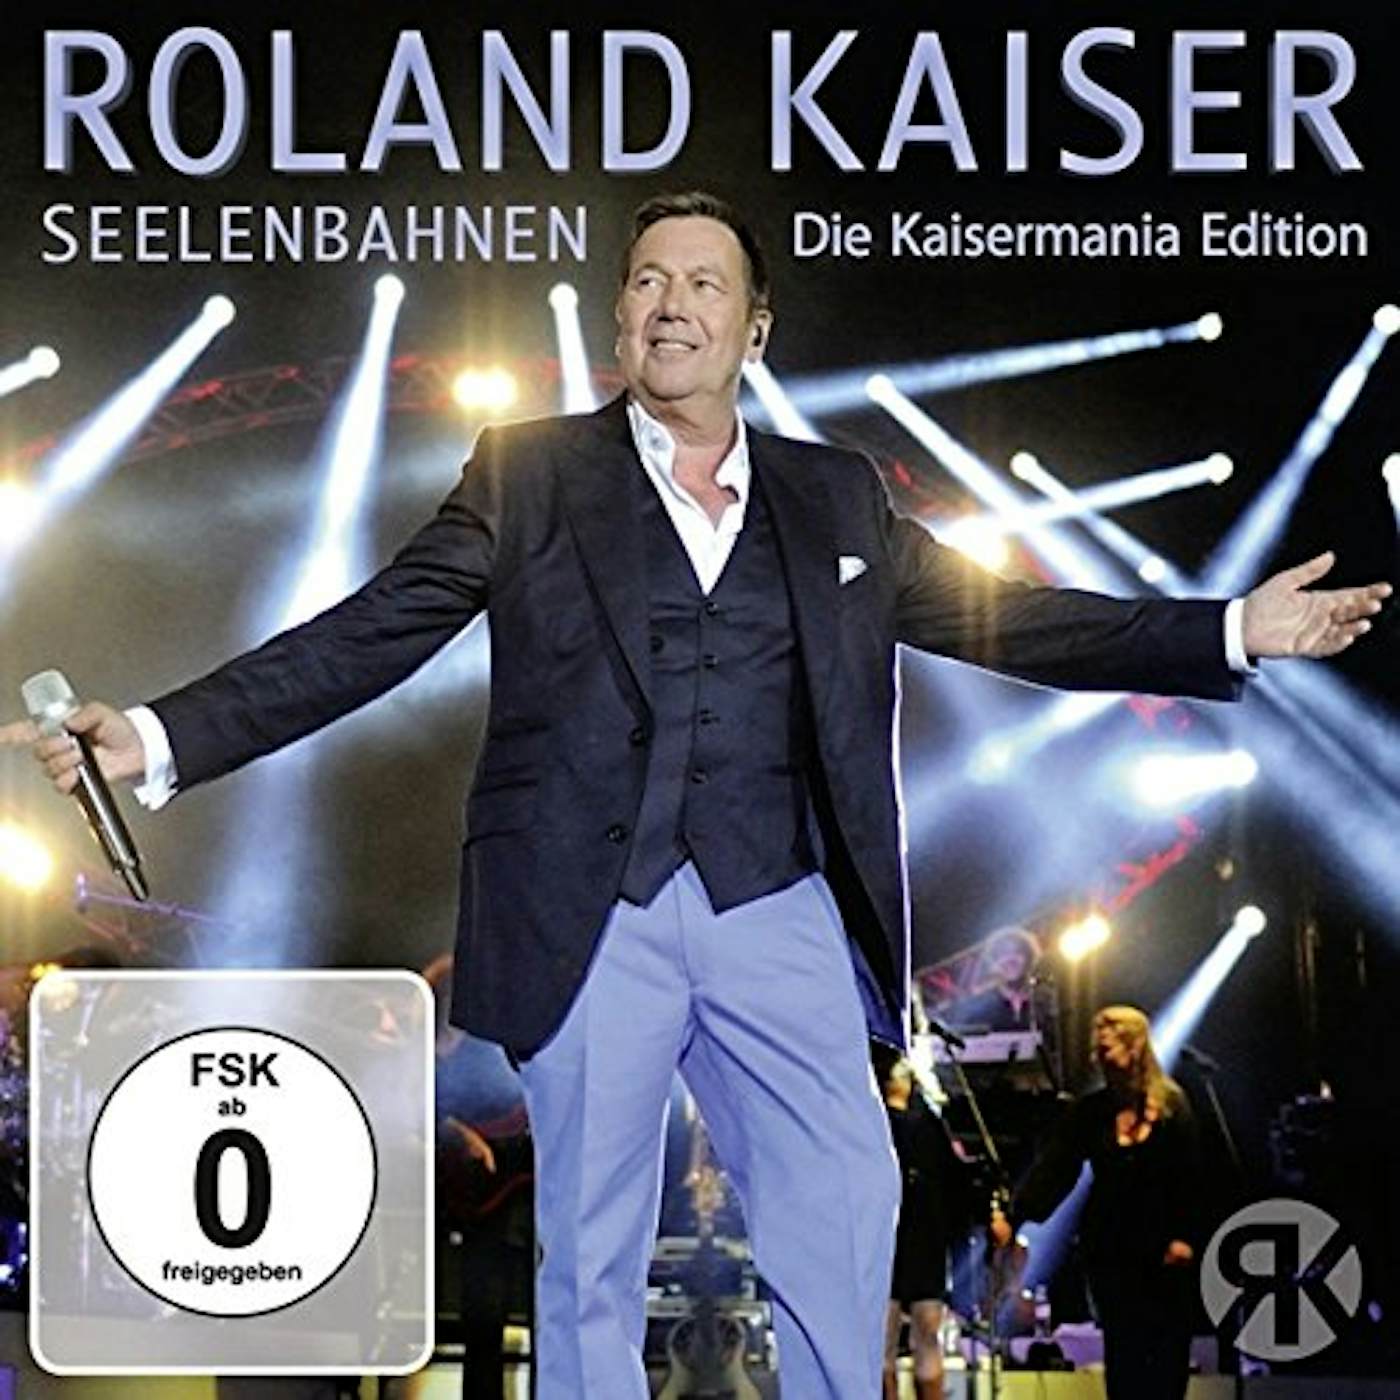 Roland Kaiser SEELENBAHNEN (KAISERMANIA EDITION) CD